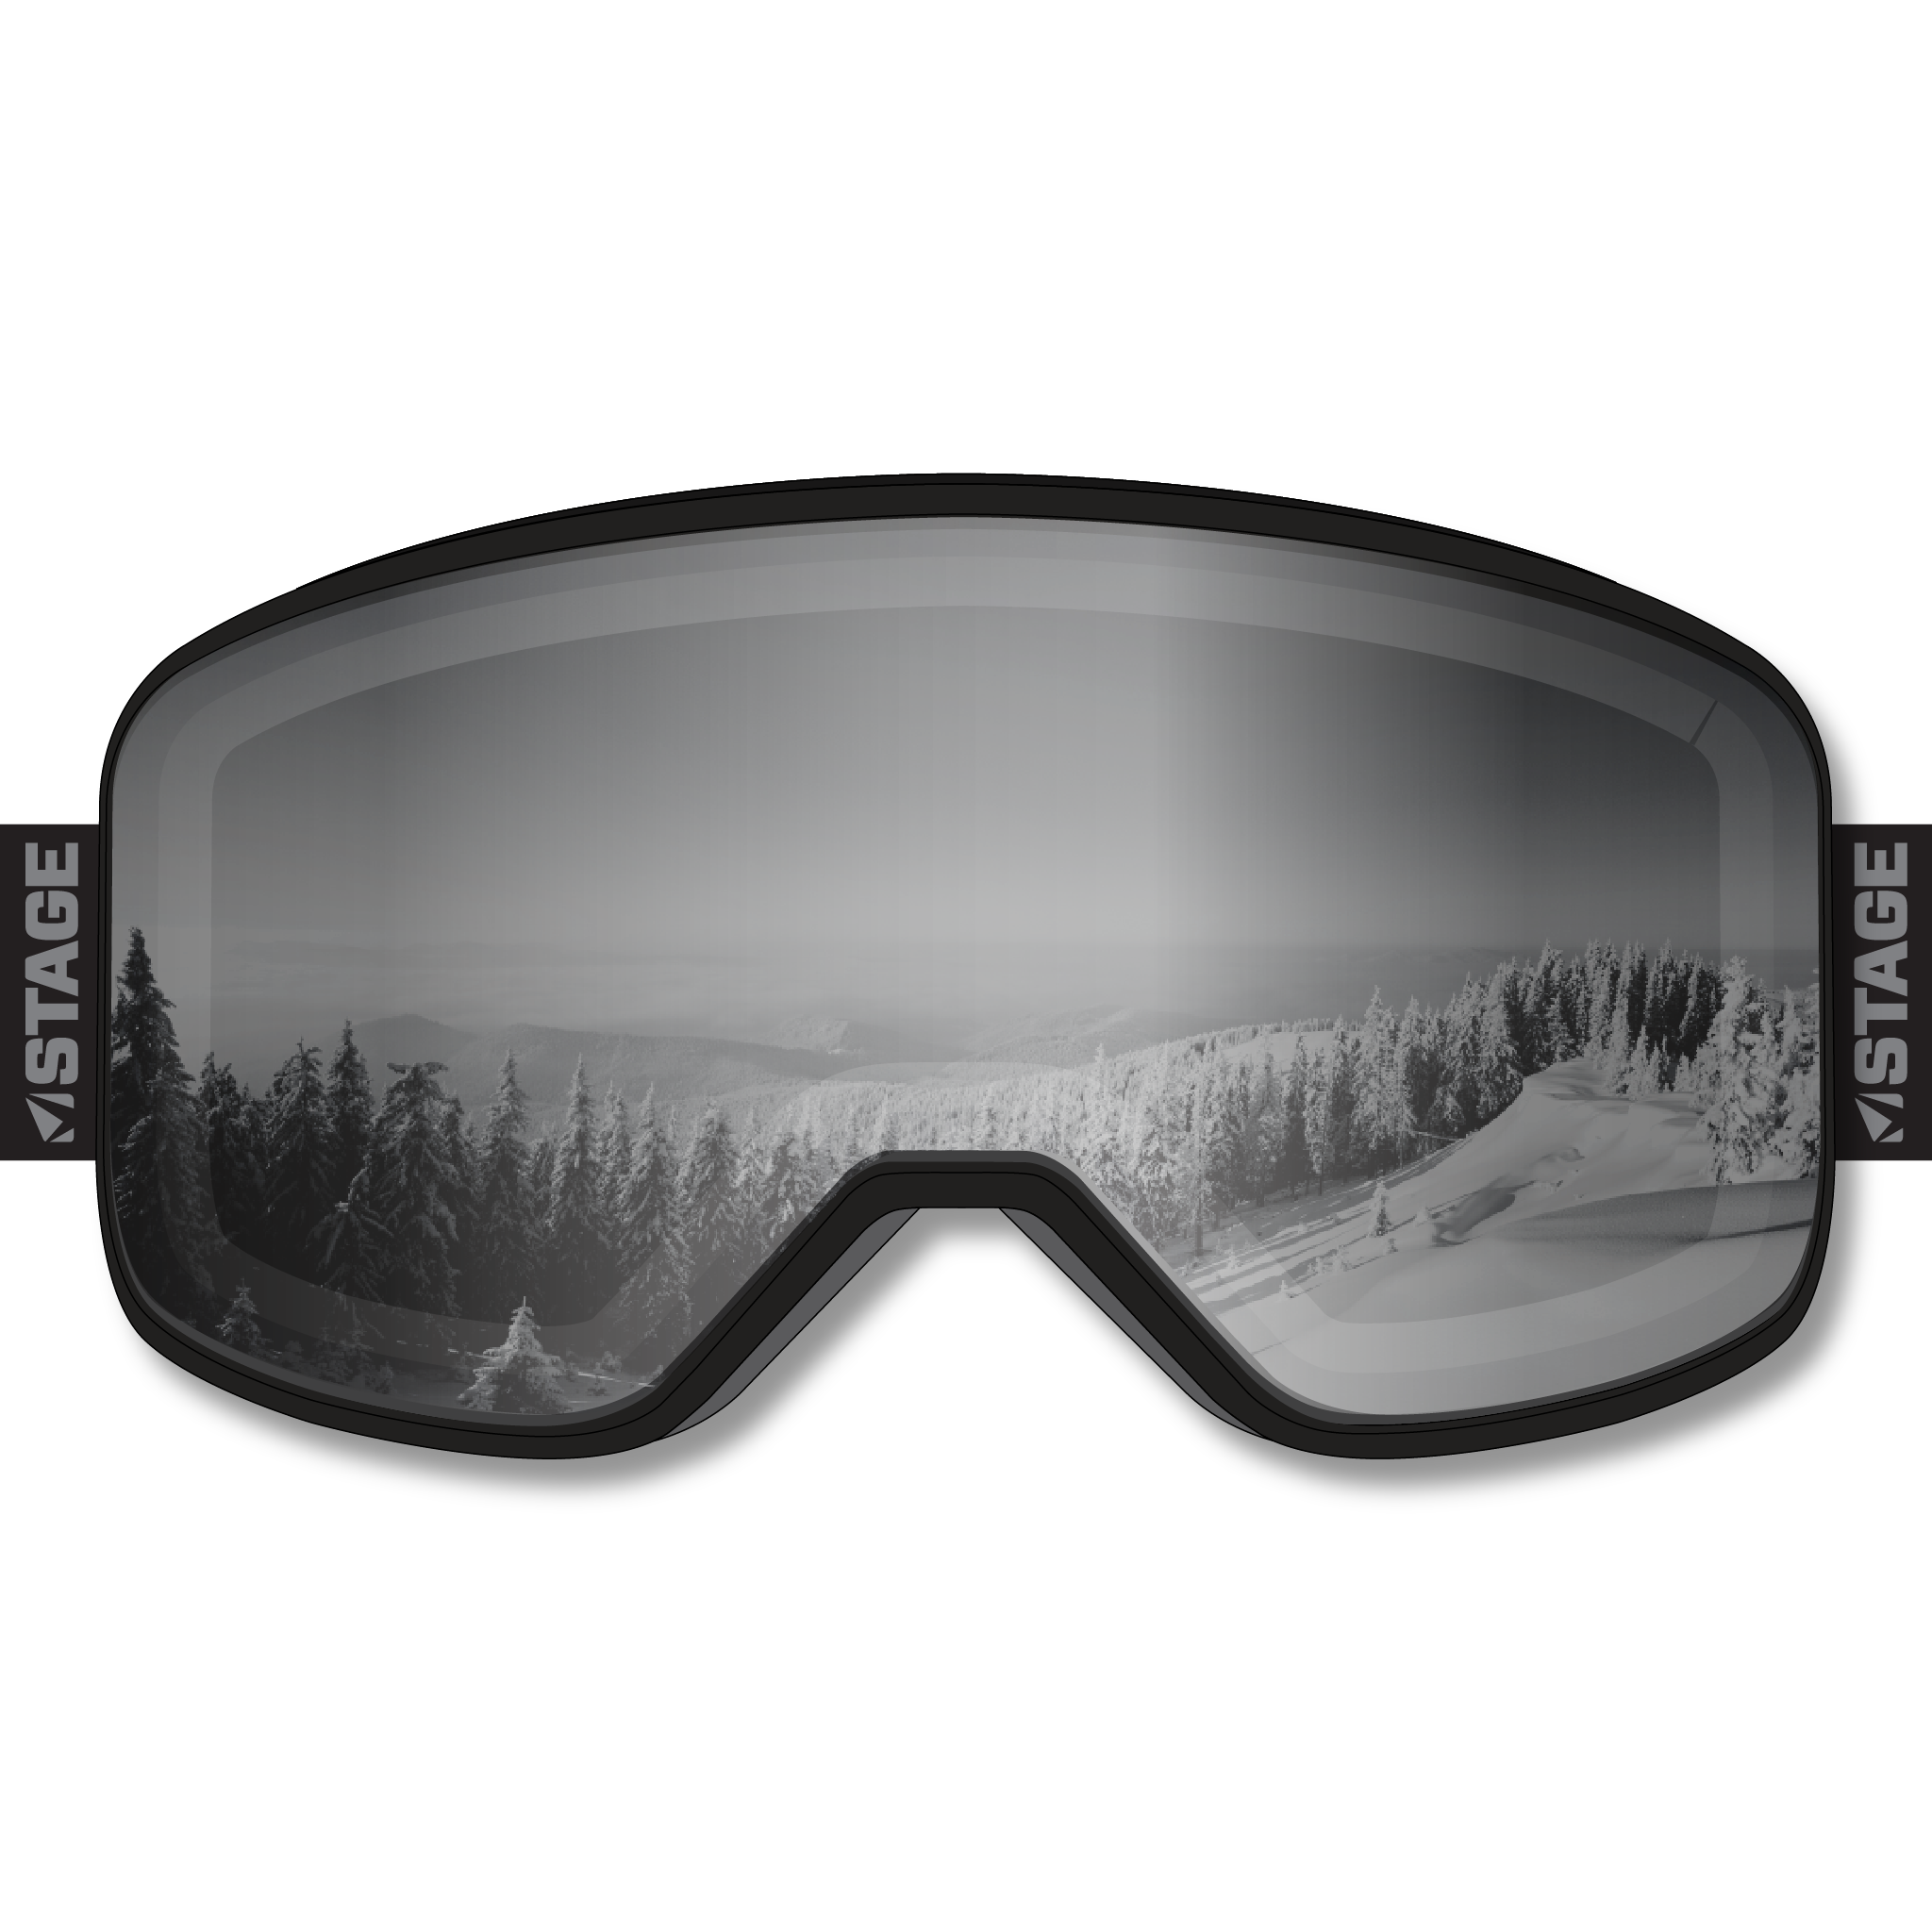 STRIDE Prop Ski Goggle - Black Frame w/ Mirror Chrome Lens - Adult Universal